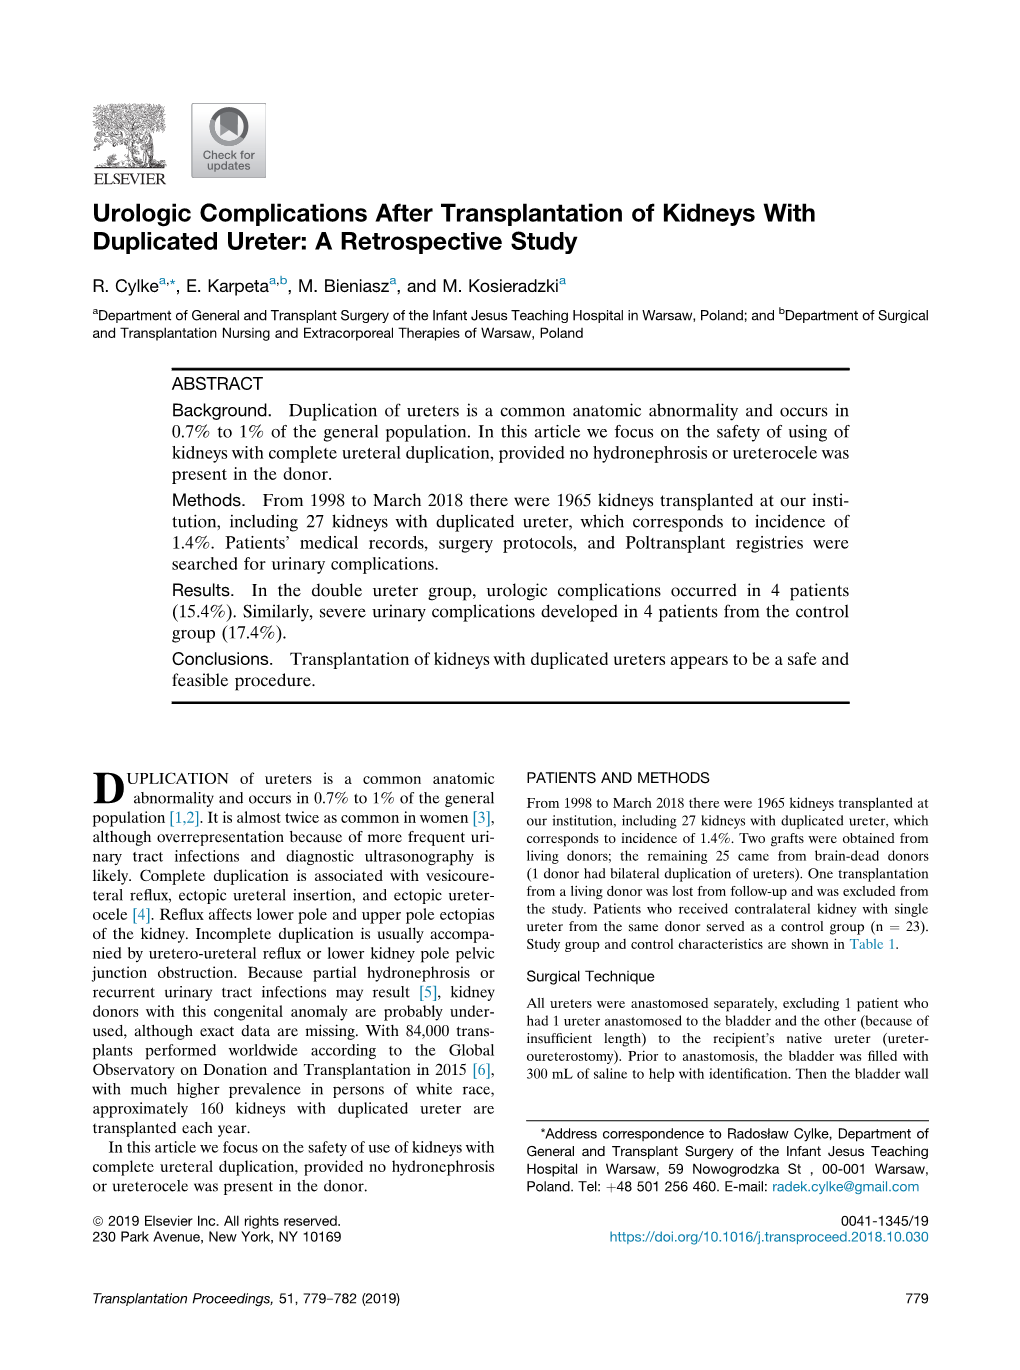 Urologic Complications After Transplantation of Kidneys with Duplicated Ureter: a Retrospective Study